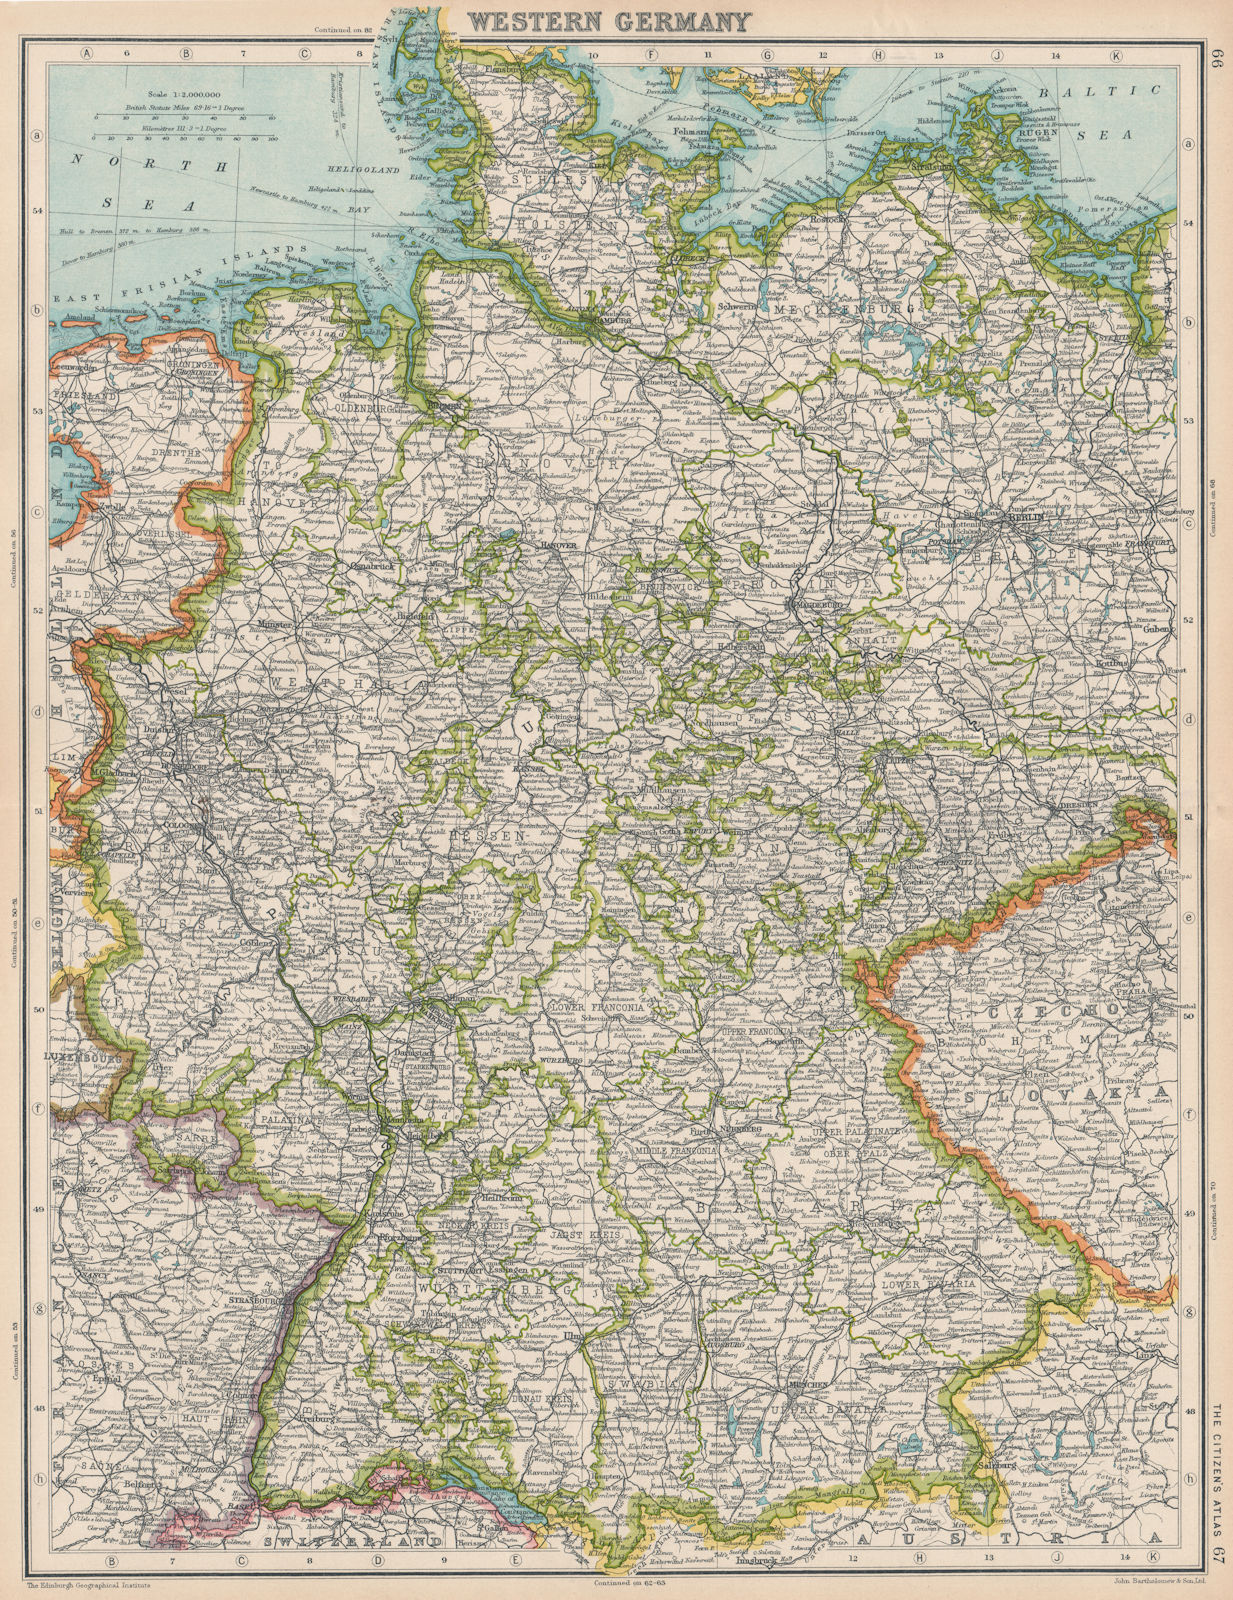 Associate Product WESTERN GERMANY. Shows Saarbeckengebiet under League of Nations mandate 1924 map